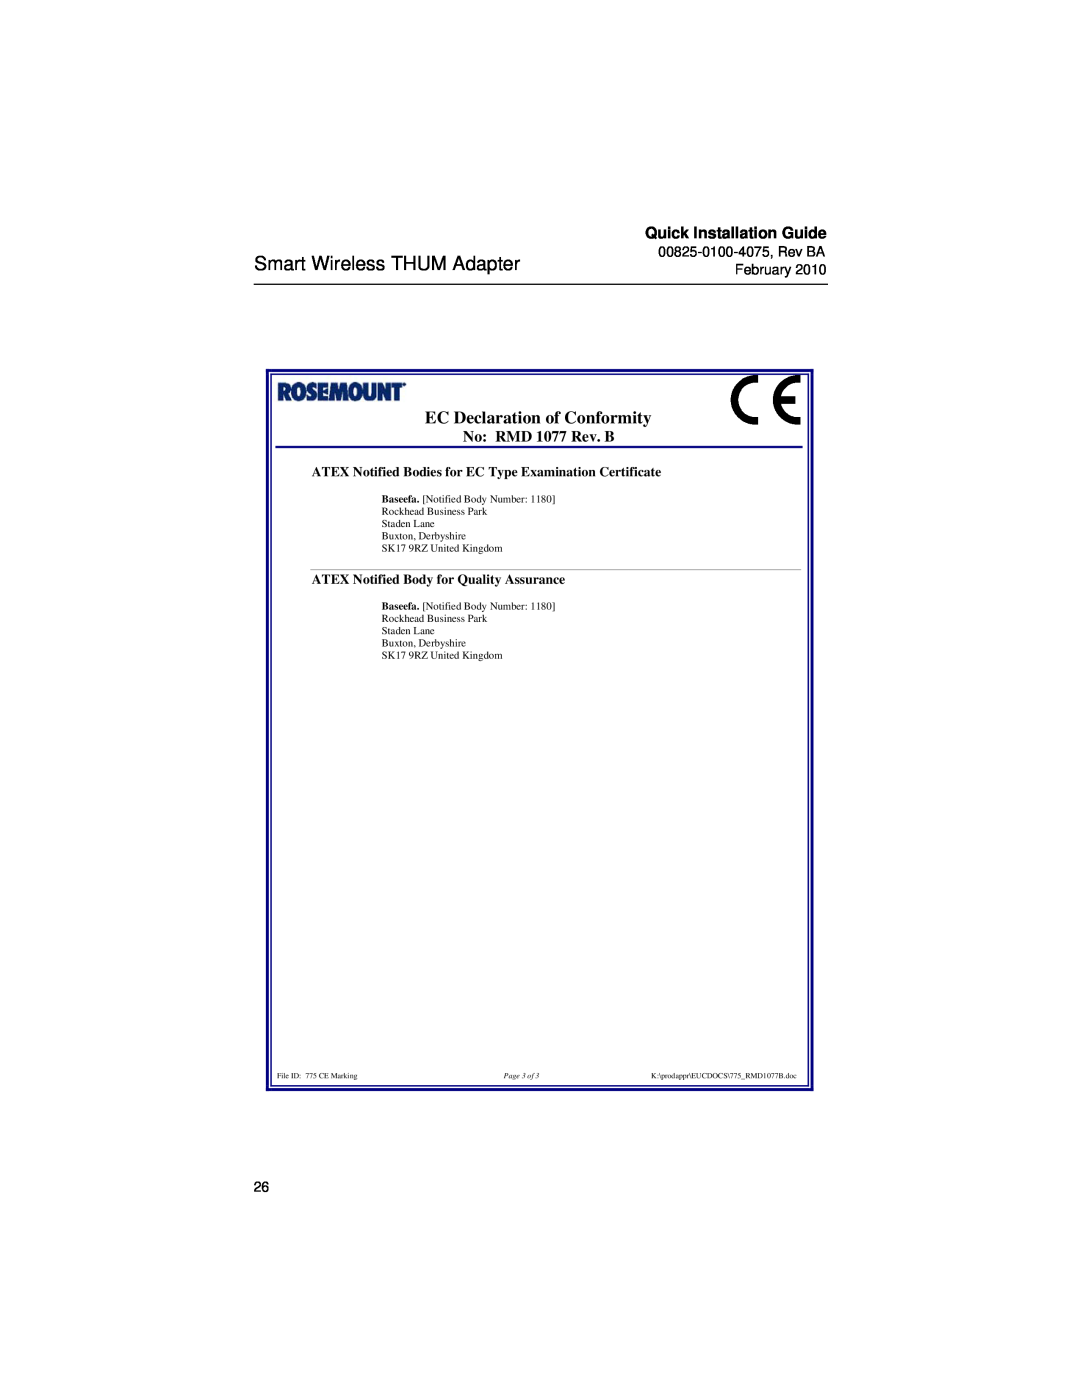 Emerson 00825-0100-4075 manual Smart Wireless THUM Adapter, EC Declaration of Conformity, Quick Installation Guide 